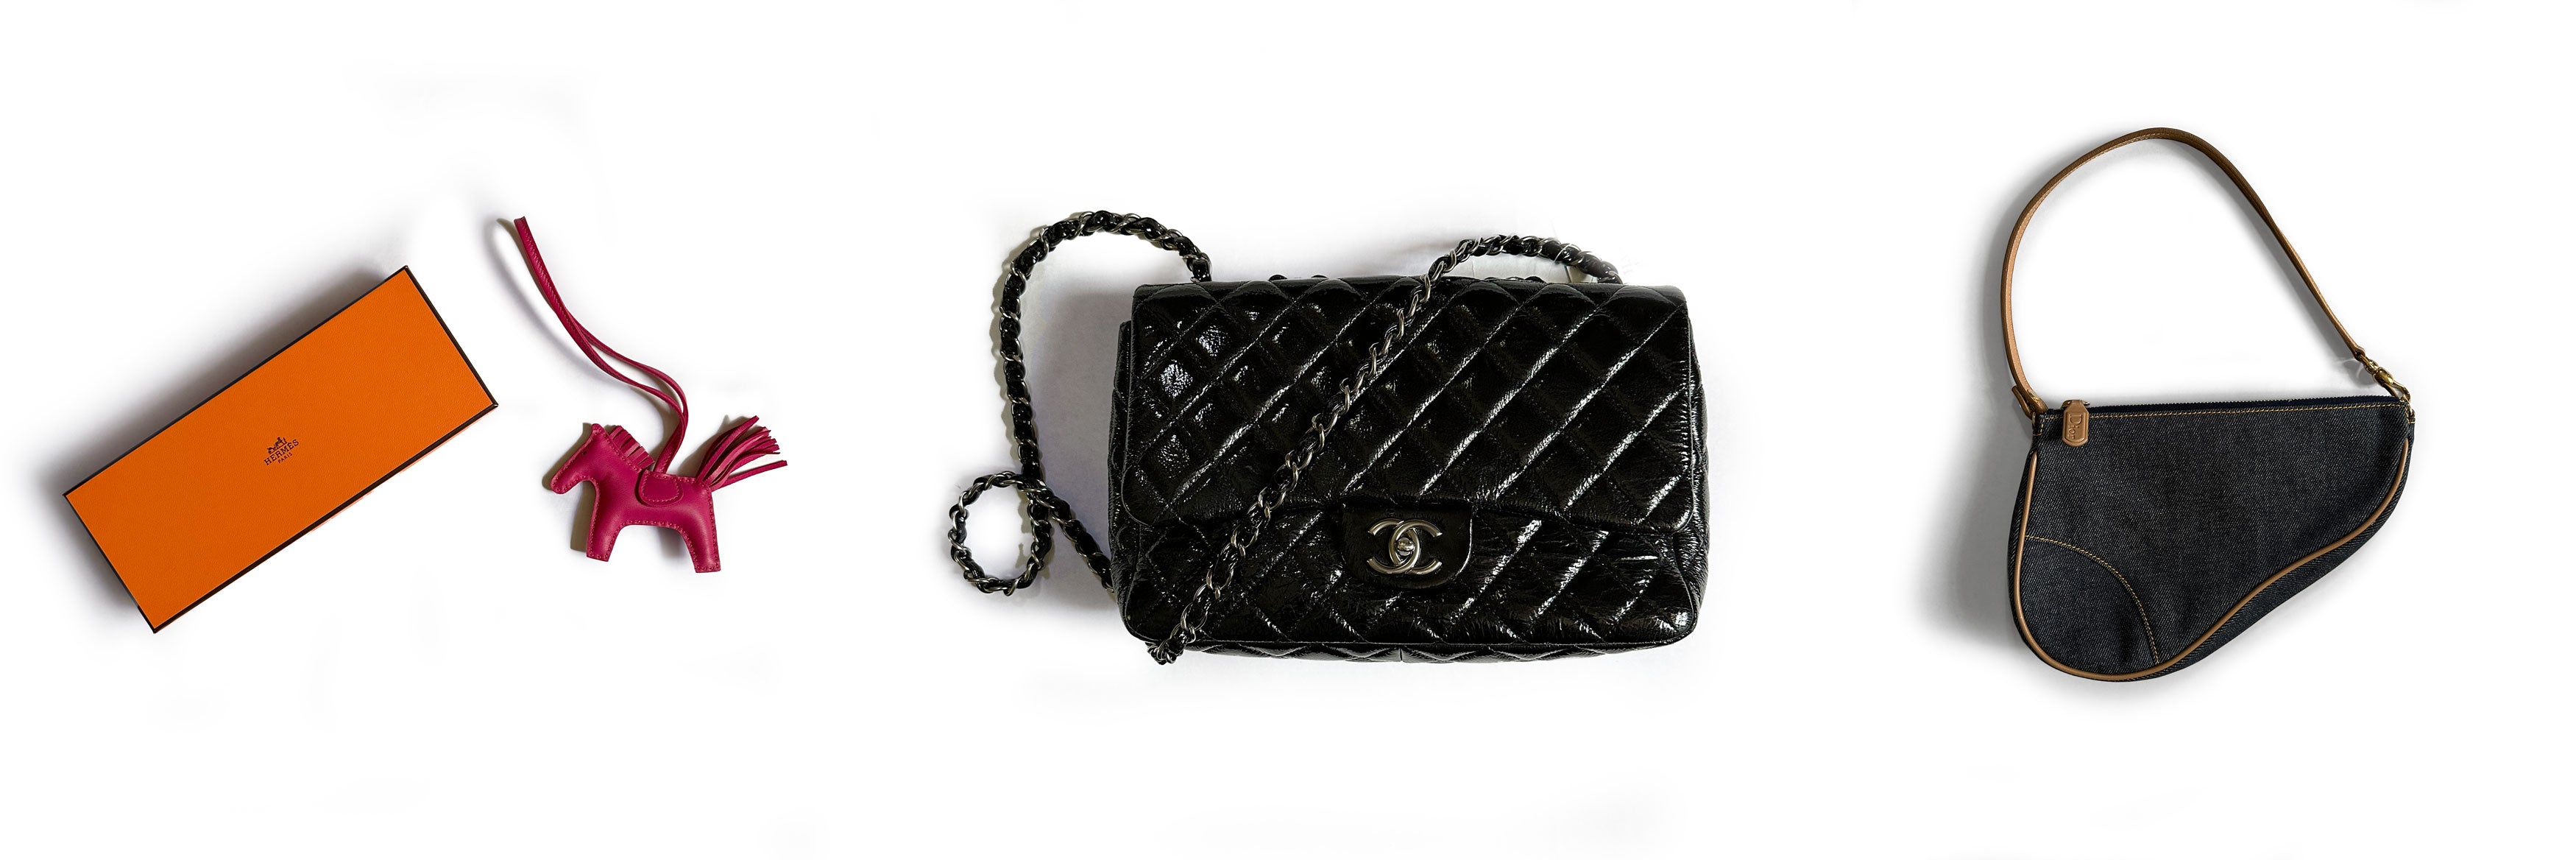 Handbag Social Club: Shop Vintage Luxury Handbags